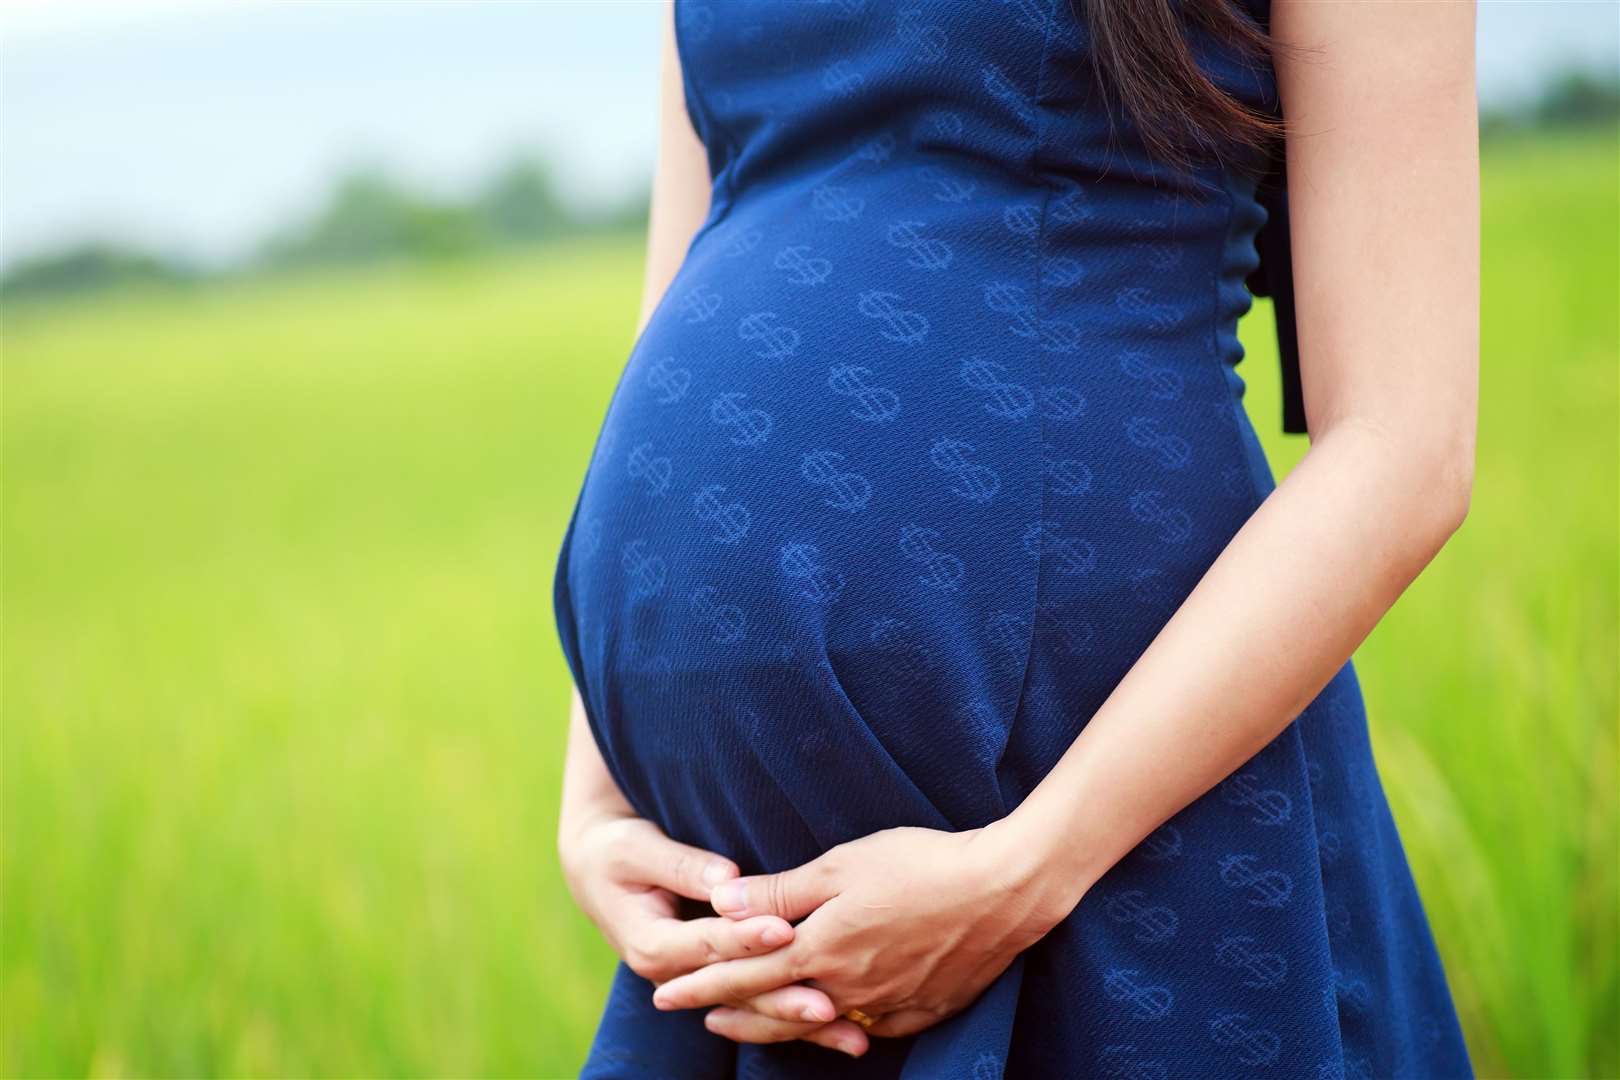 The number of teenage pregnancies is declining in Kent